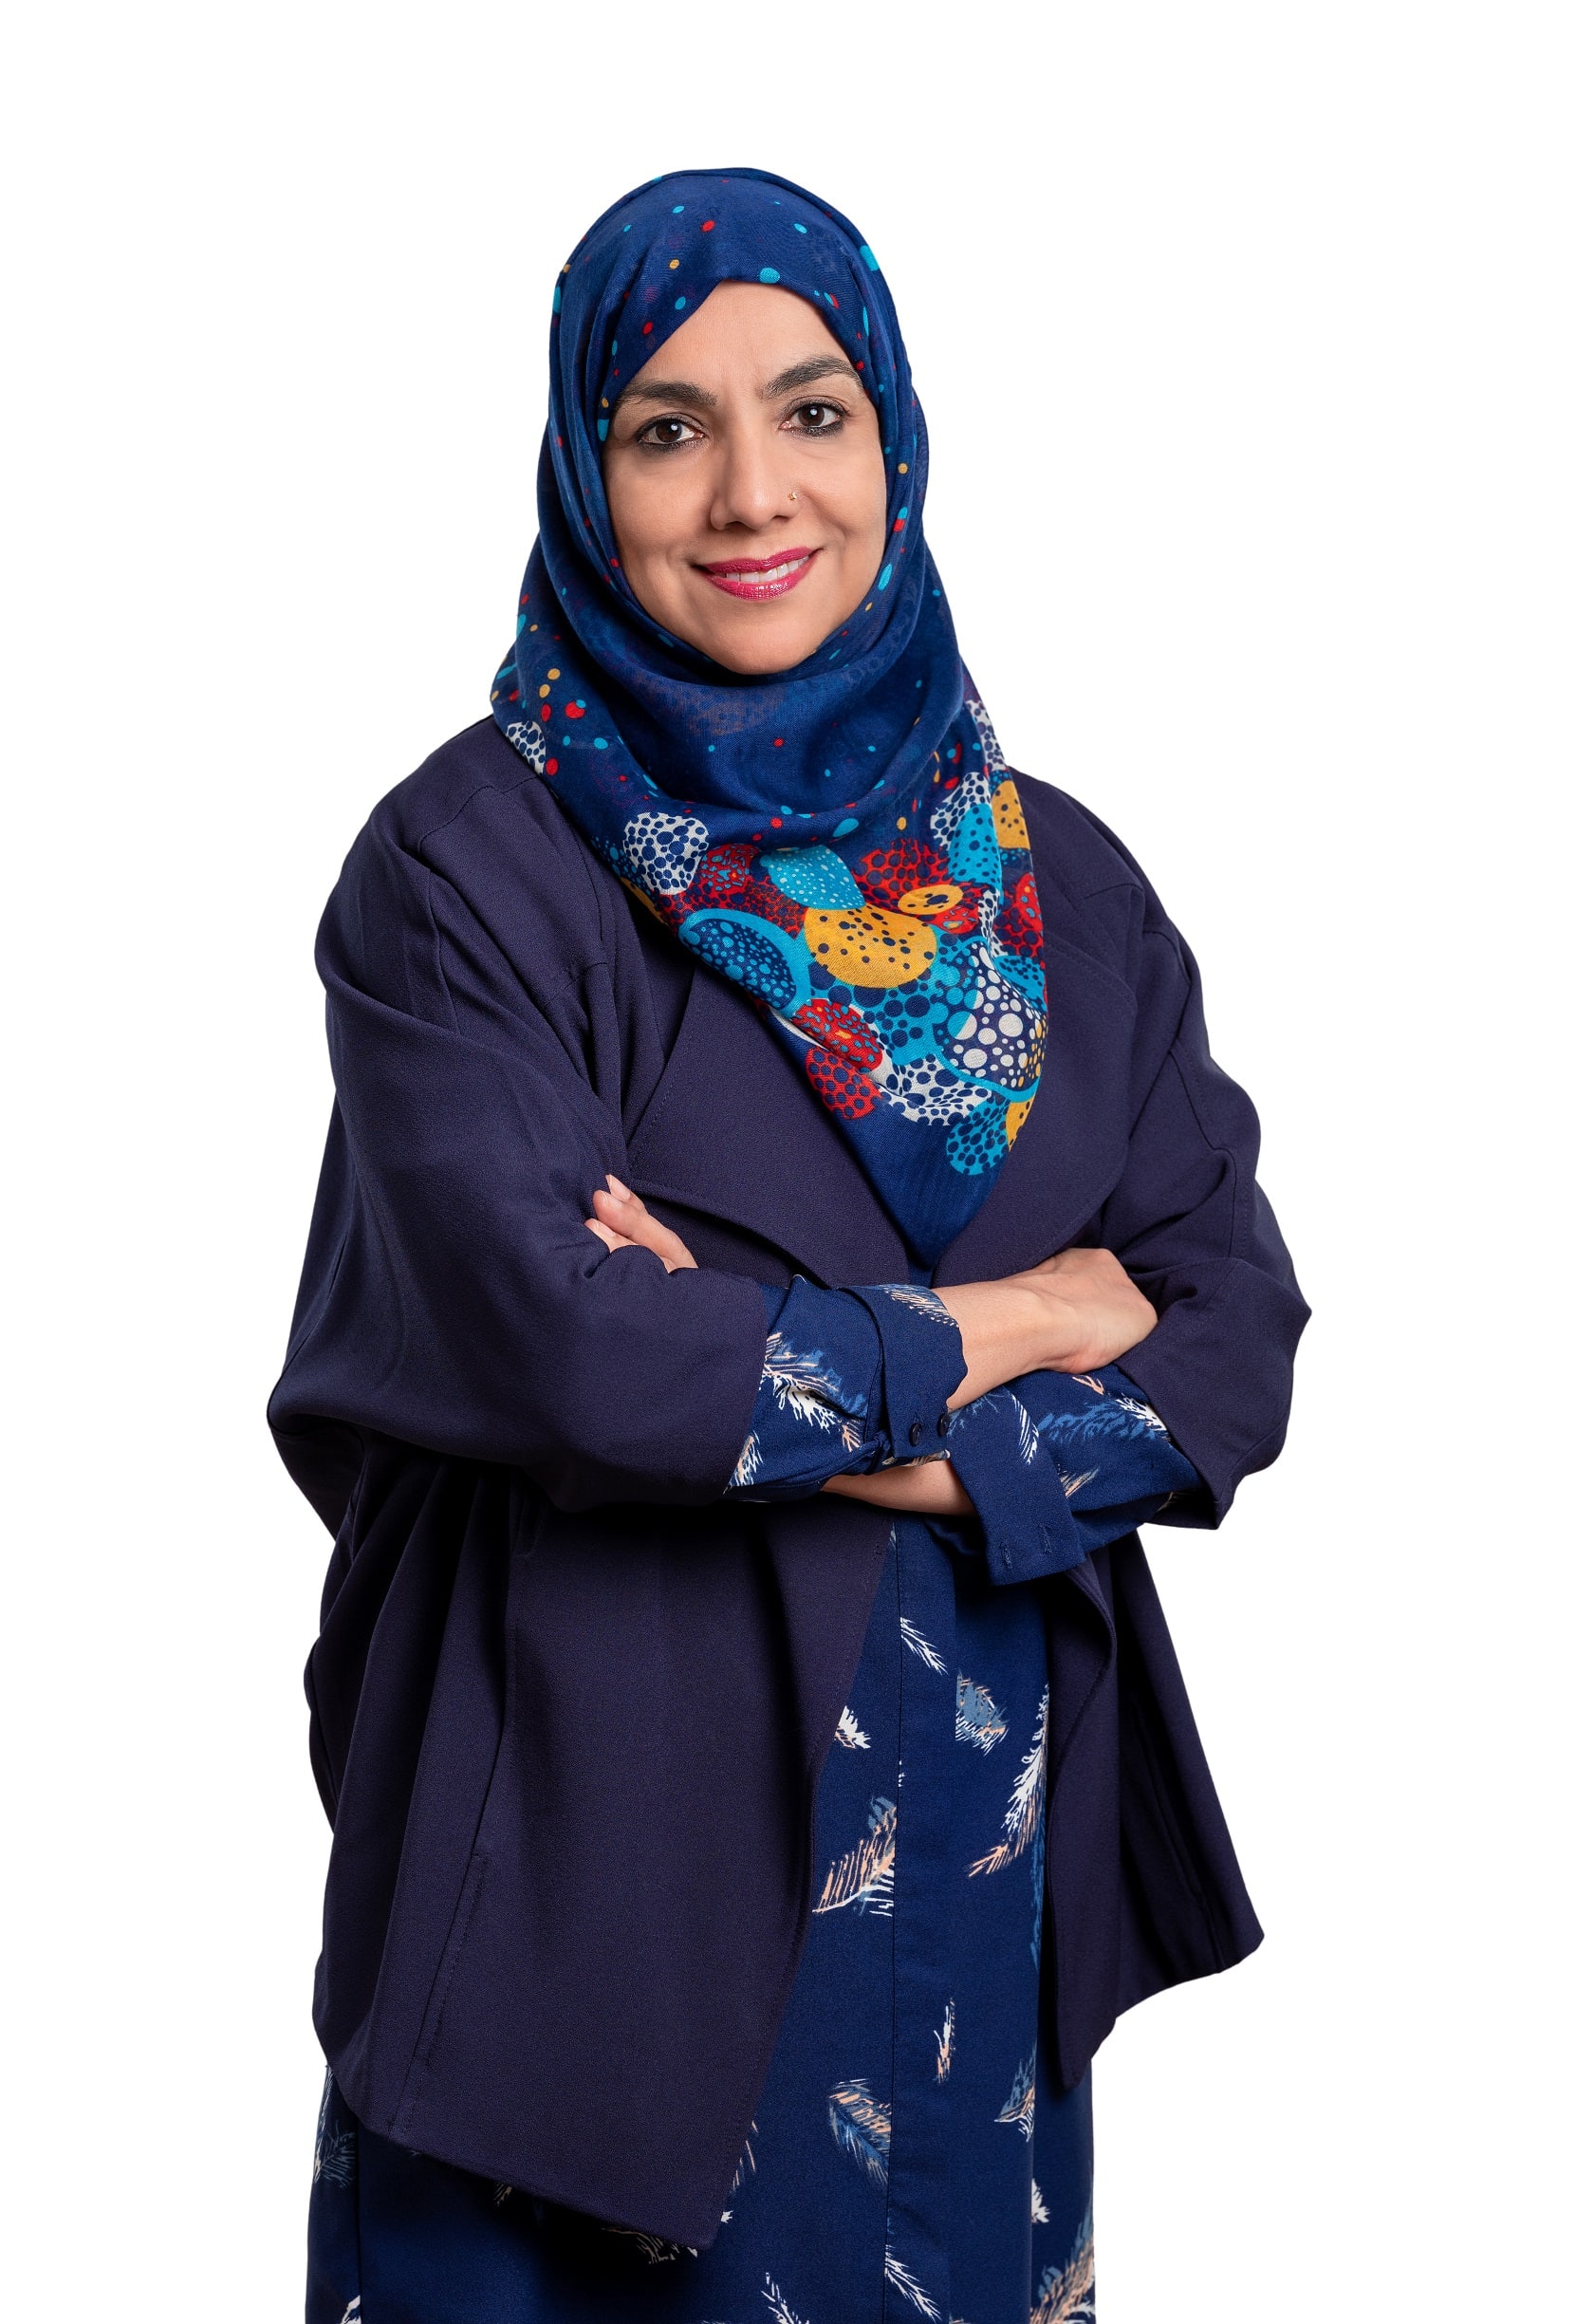 Dr. Farah Asghar